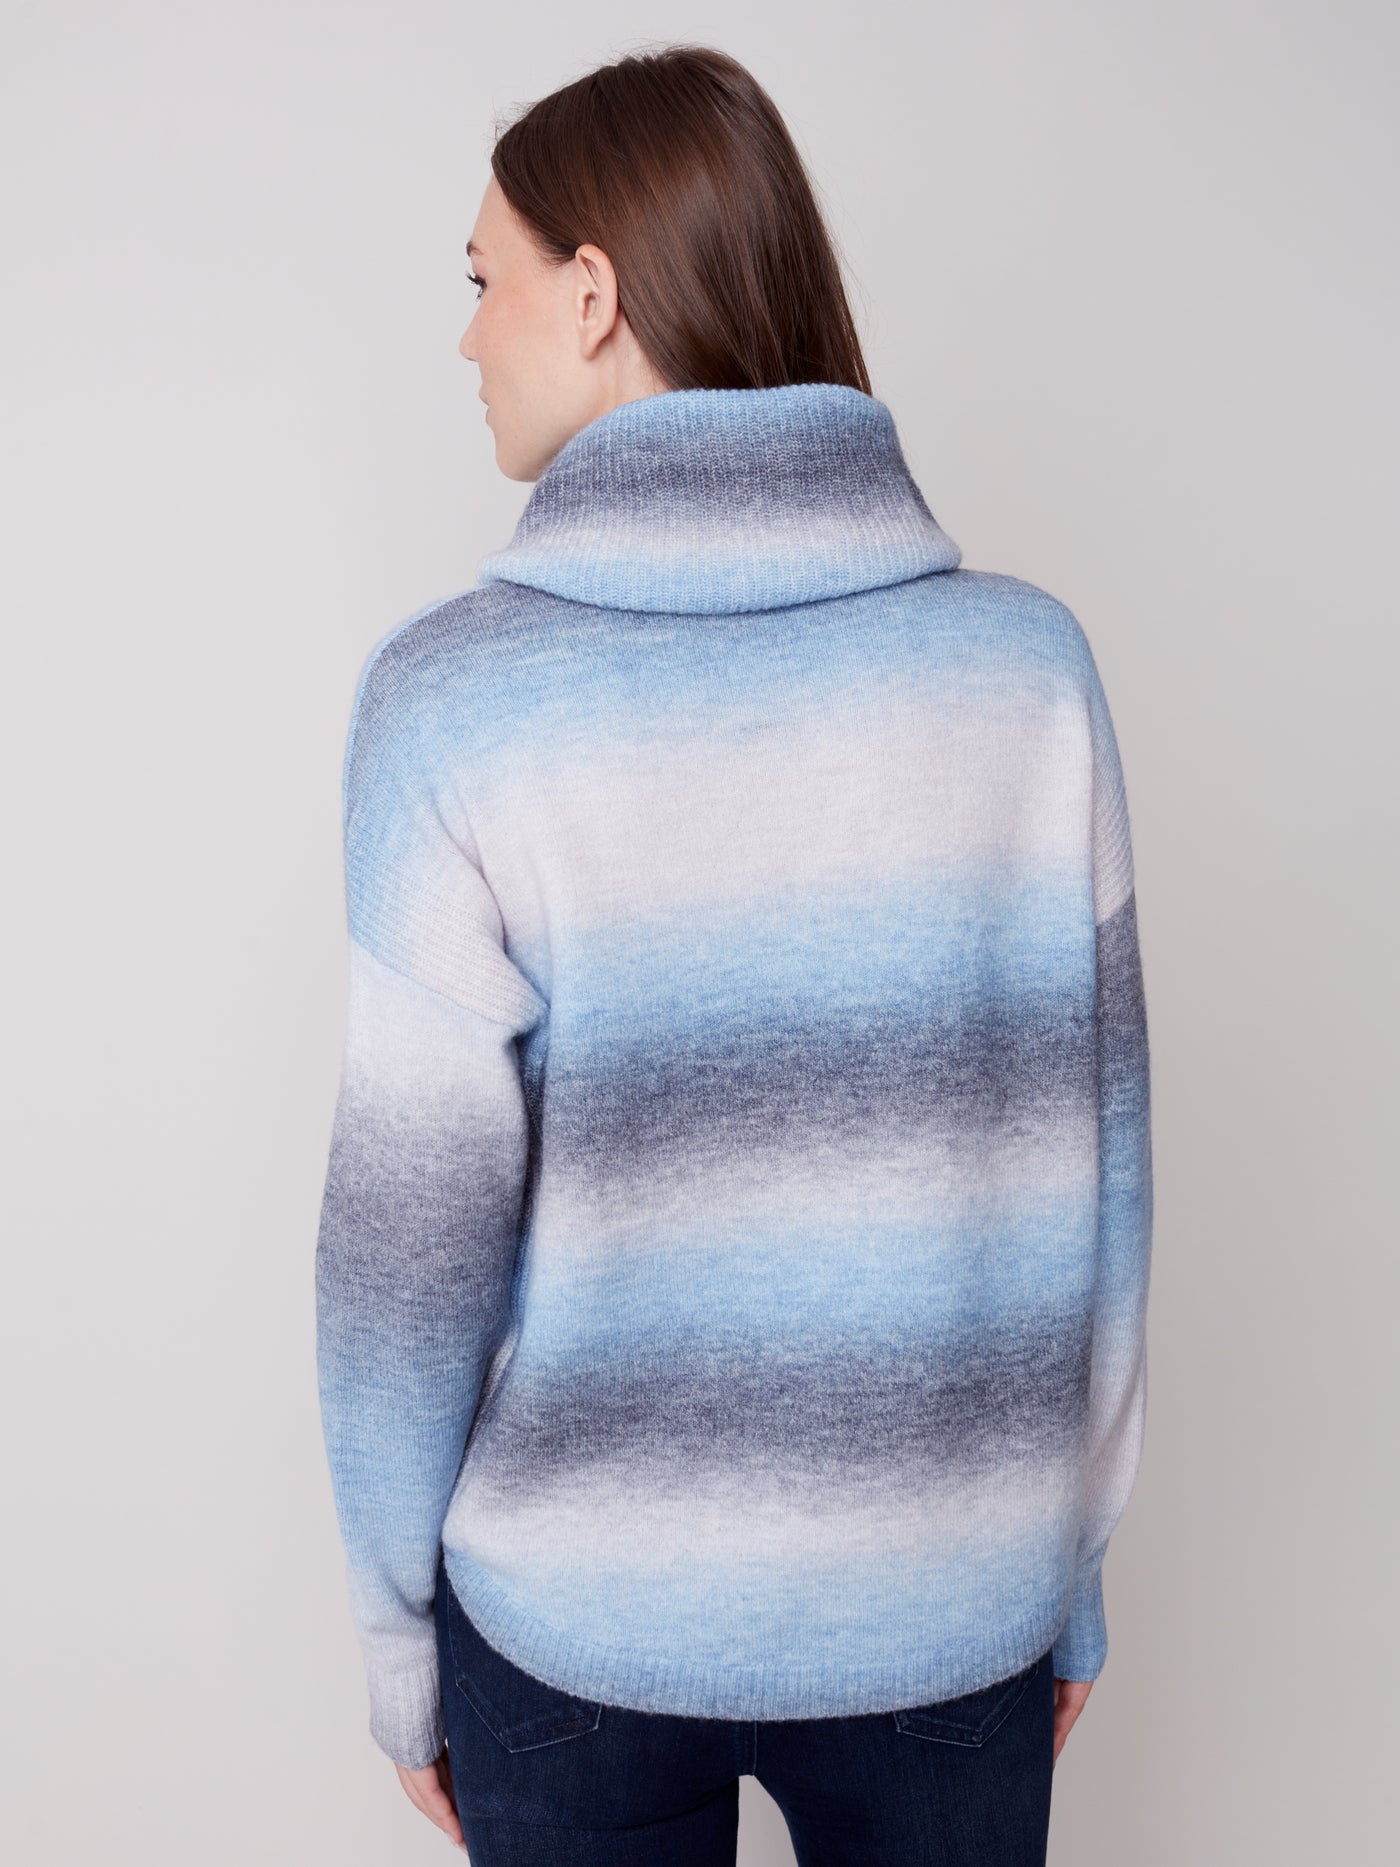 Charlie B Top - Scarf Sweater - Denim Blue